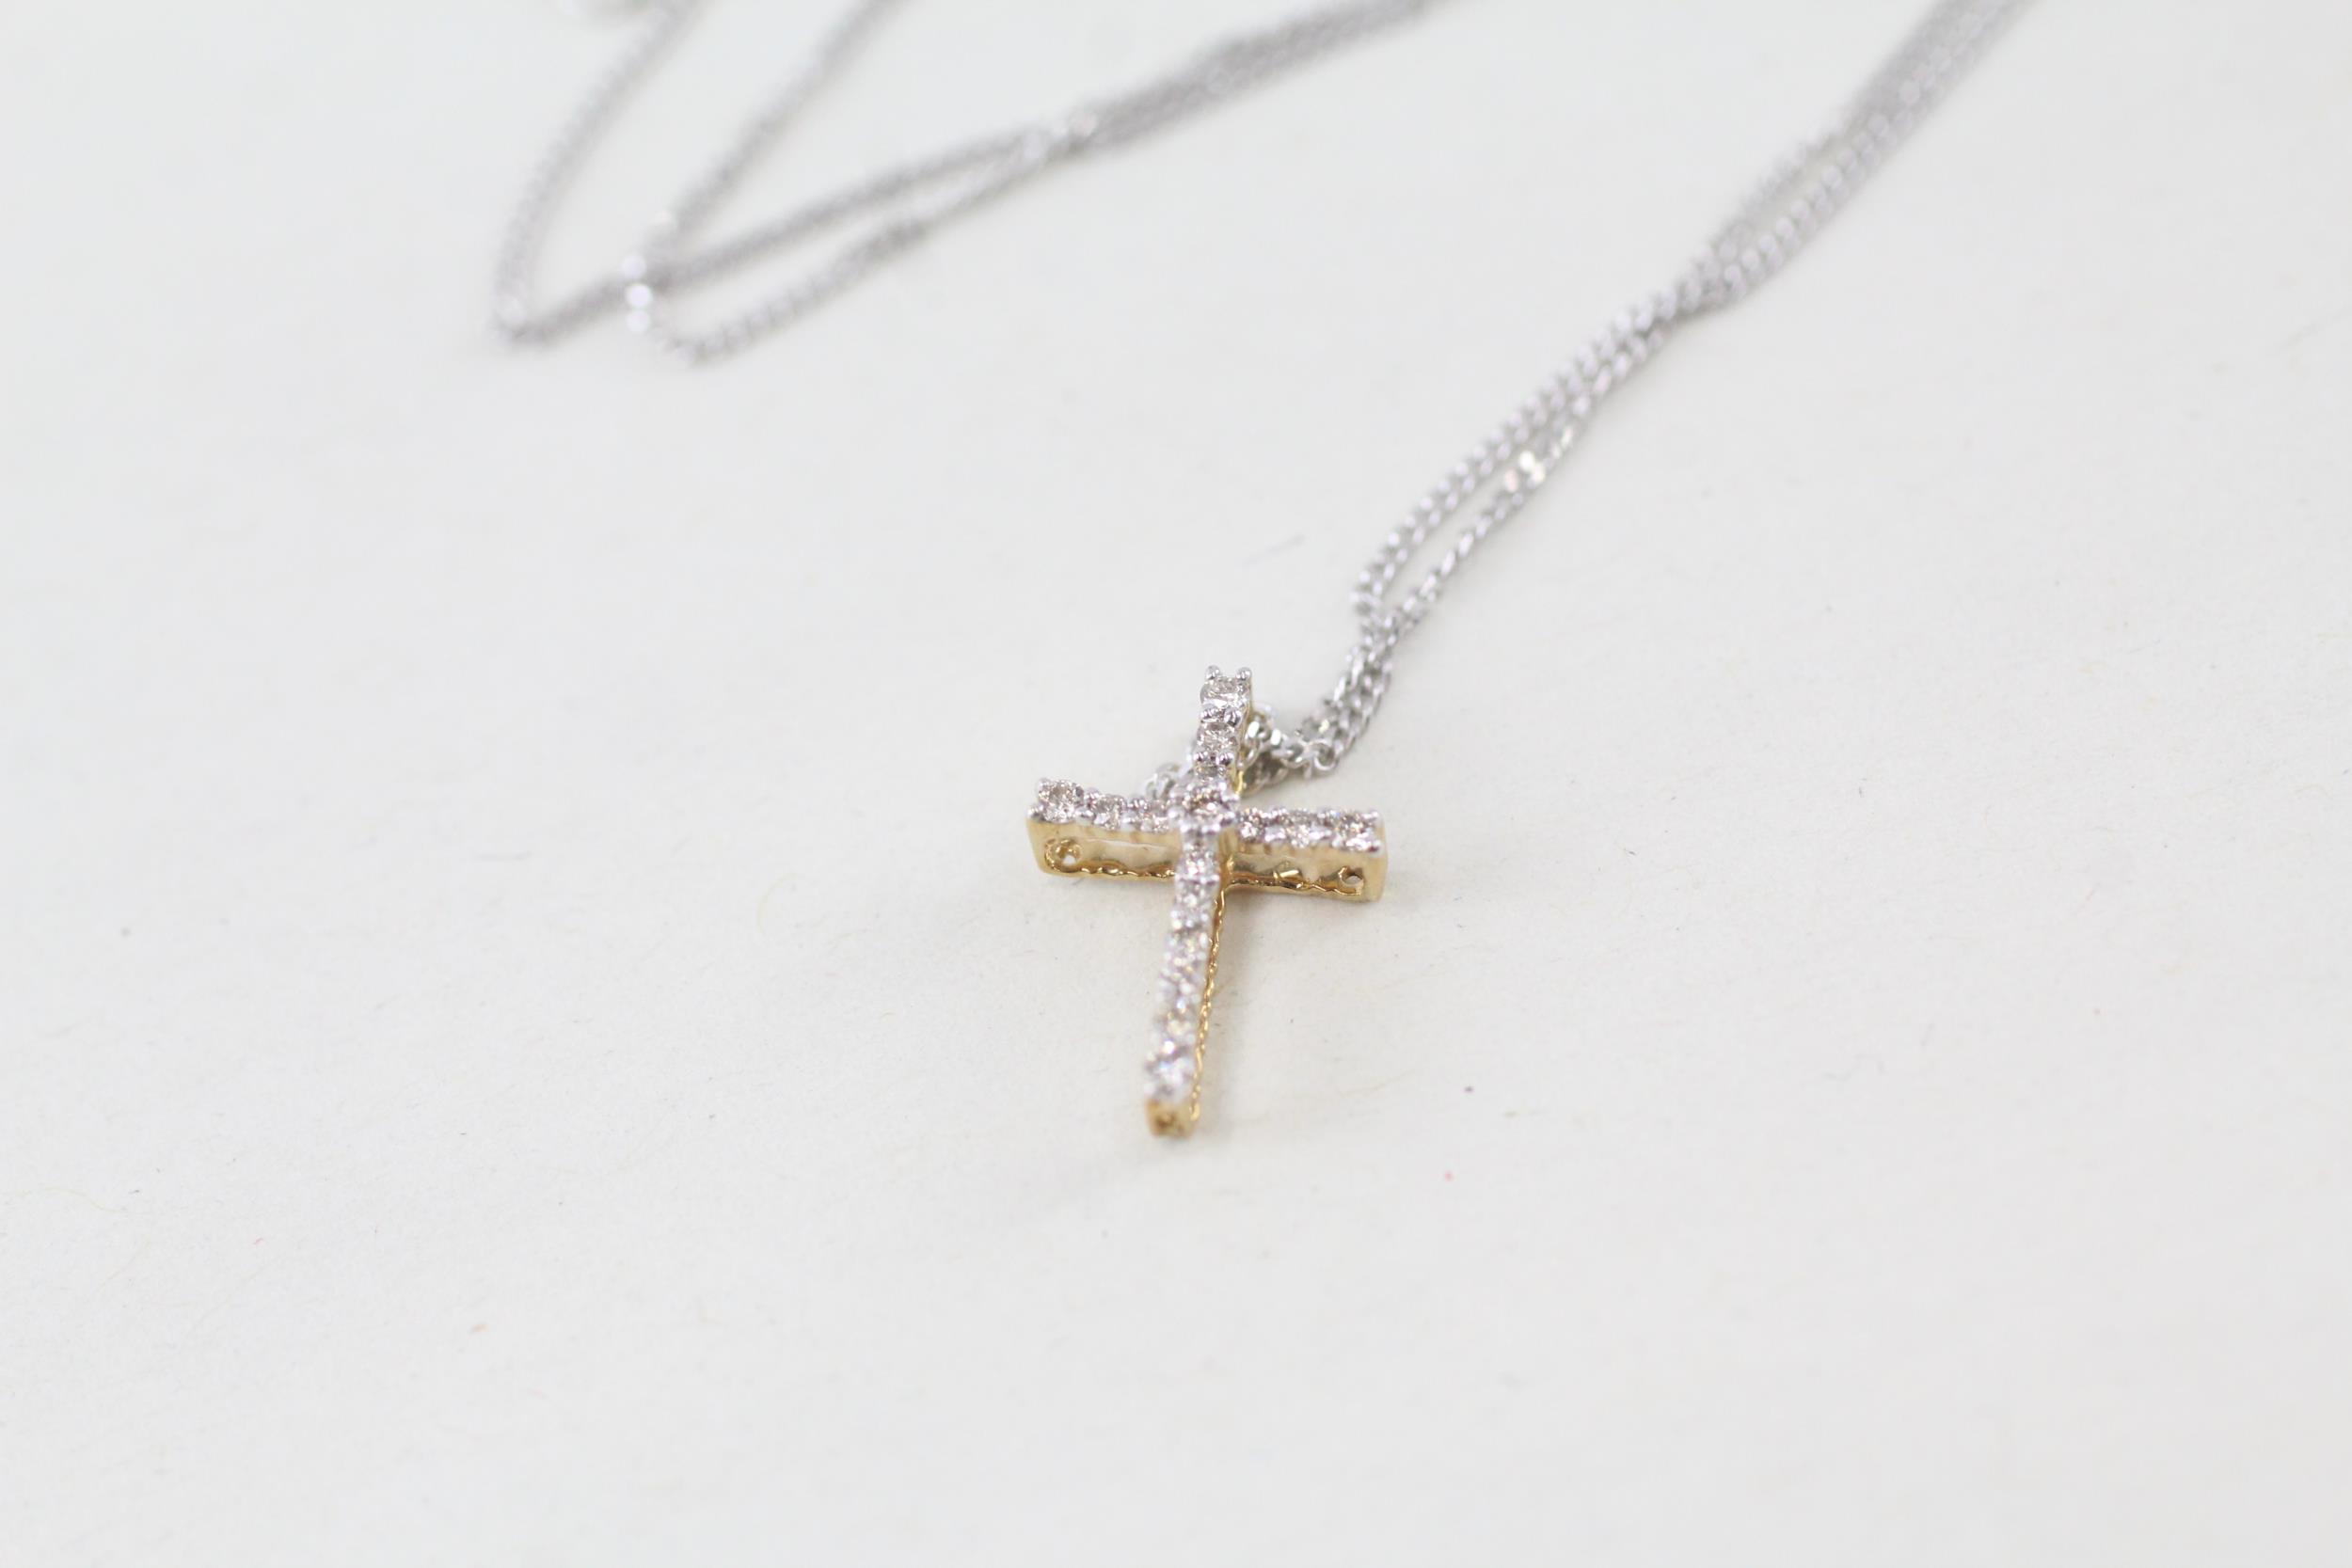 9ct gold diamond cross pendant necklace - 1.1 g